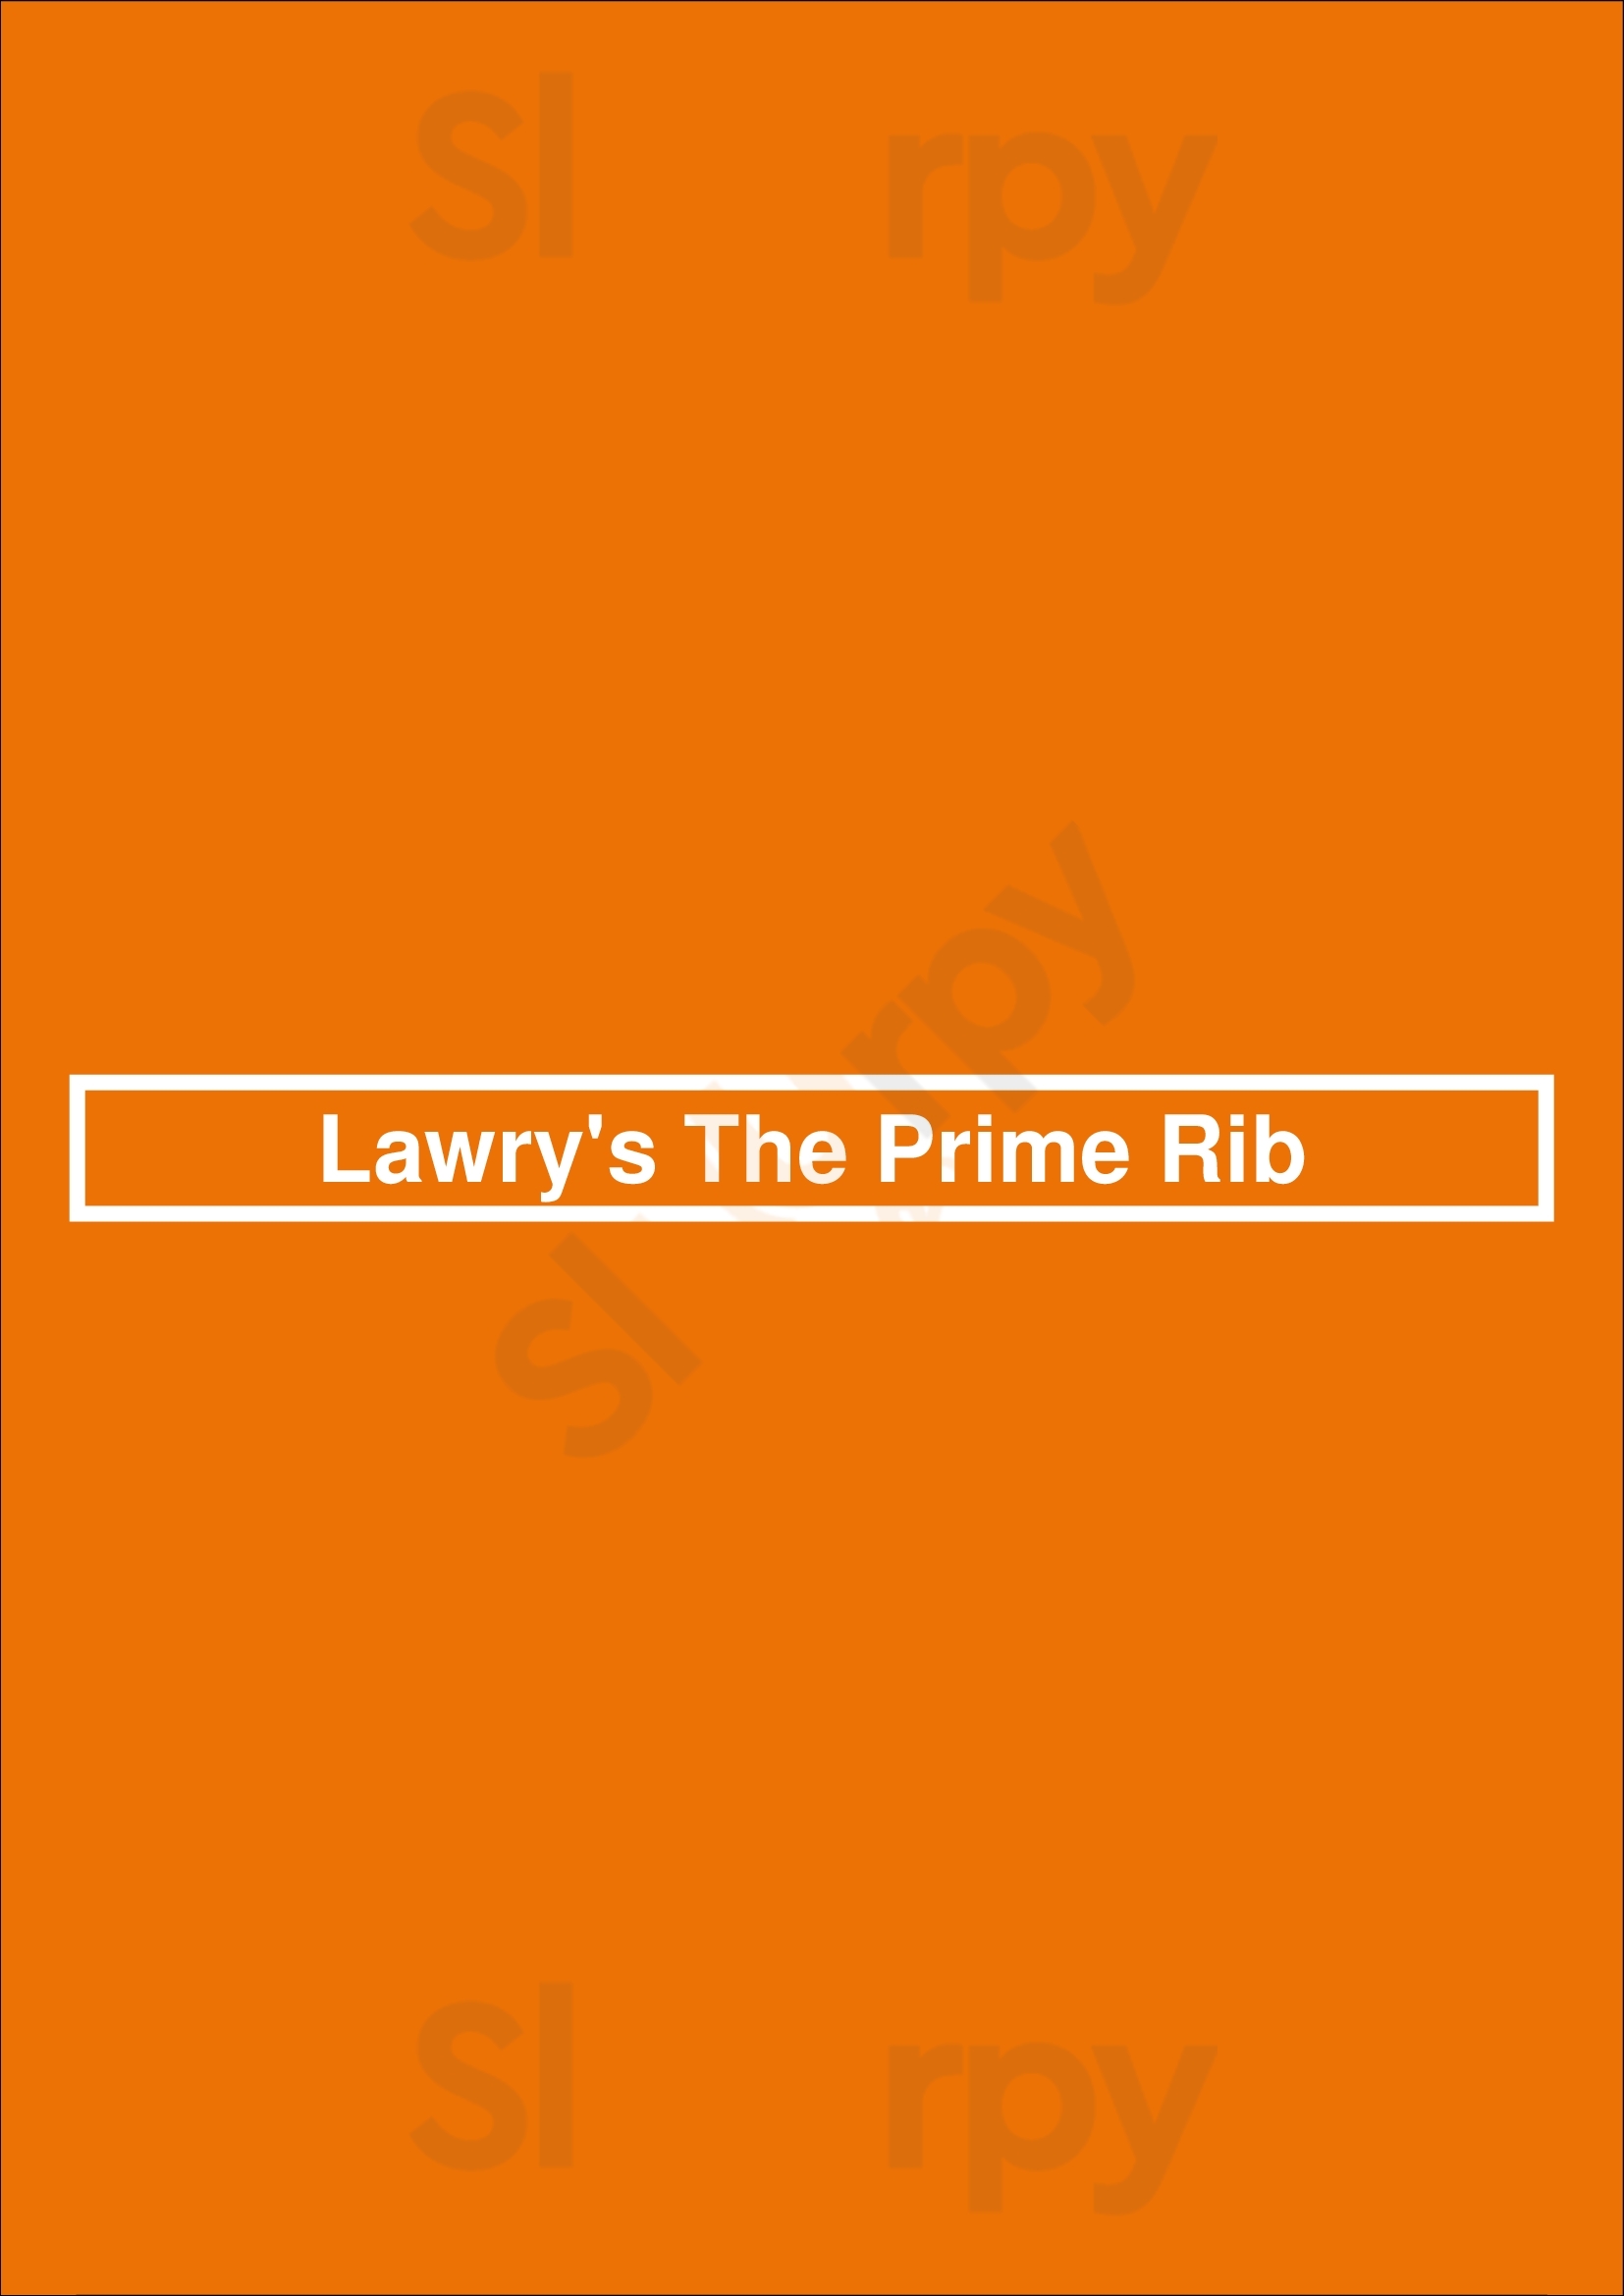 Lawry's The Prime Rib Singapore Menu - 1